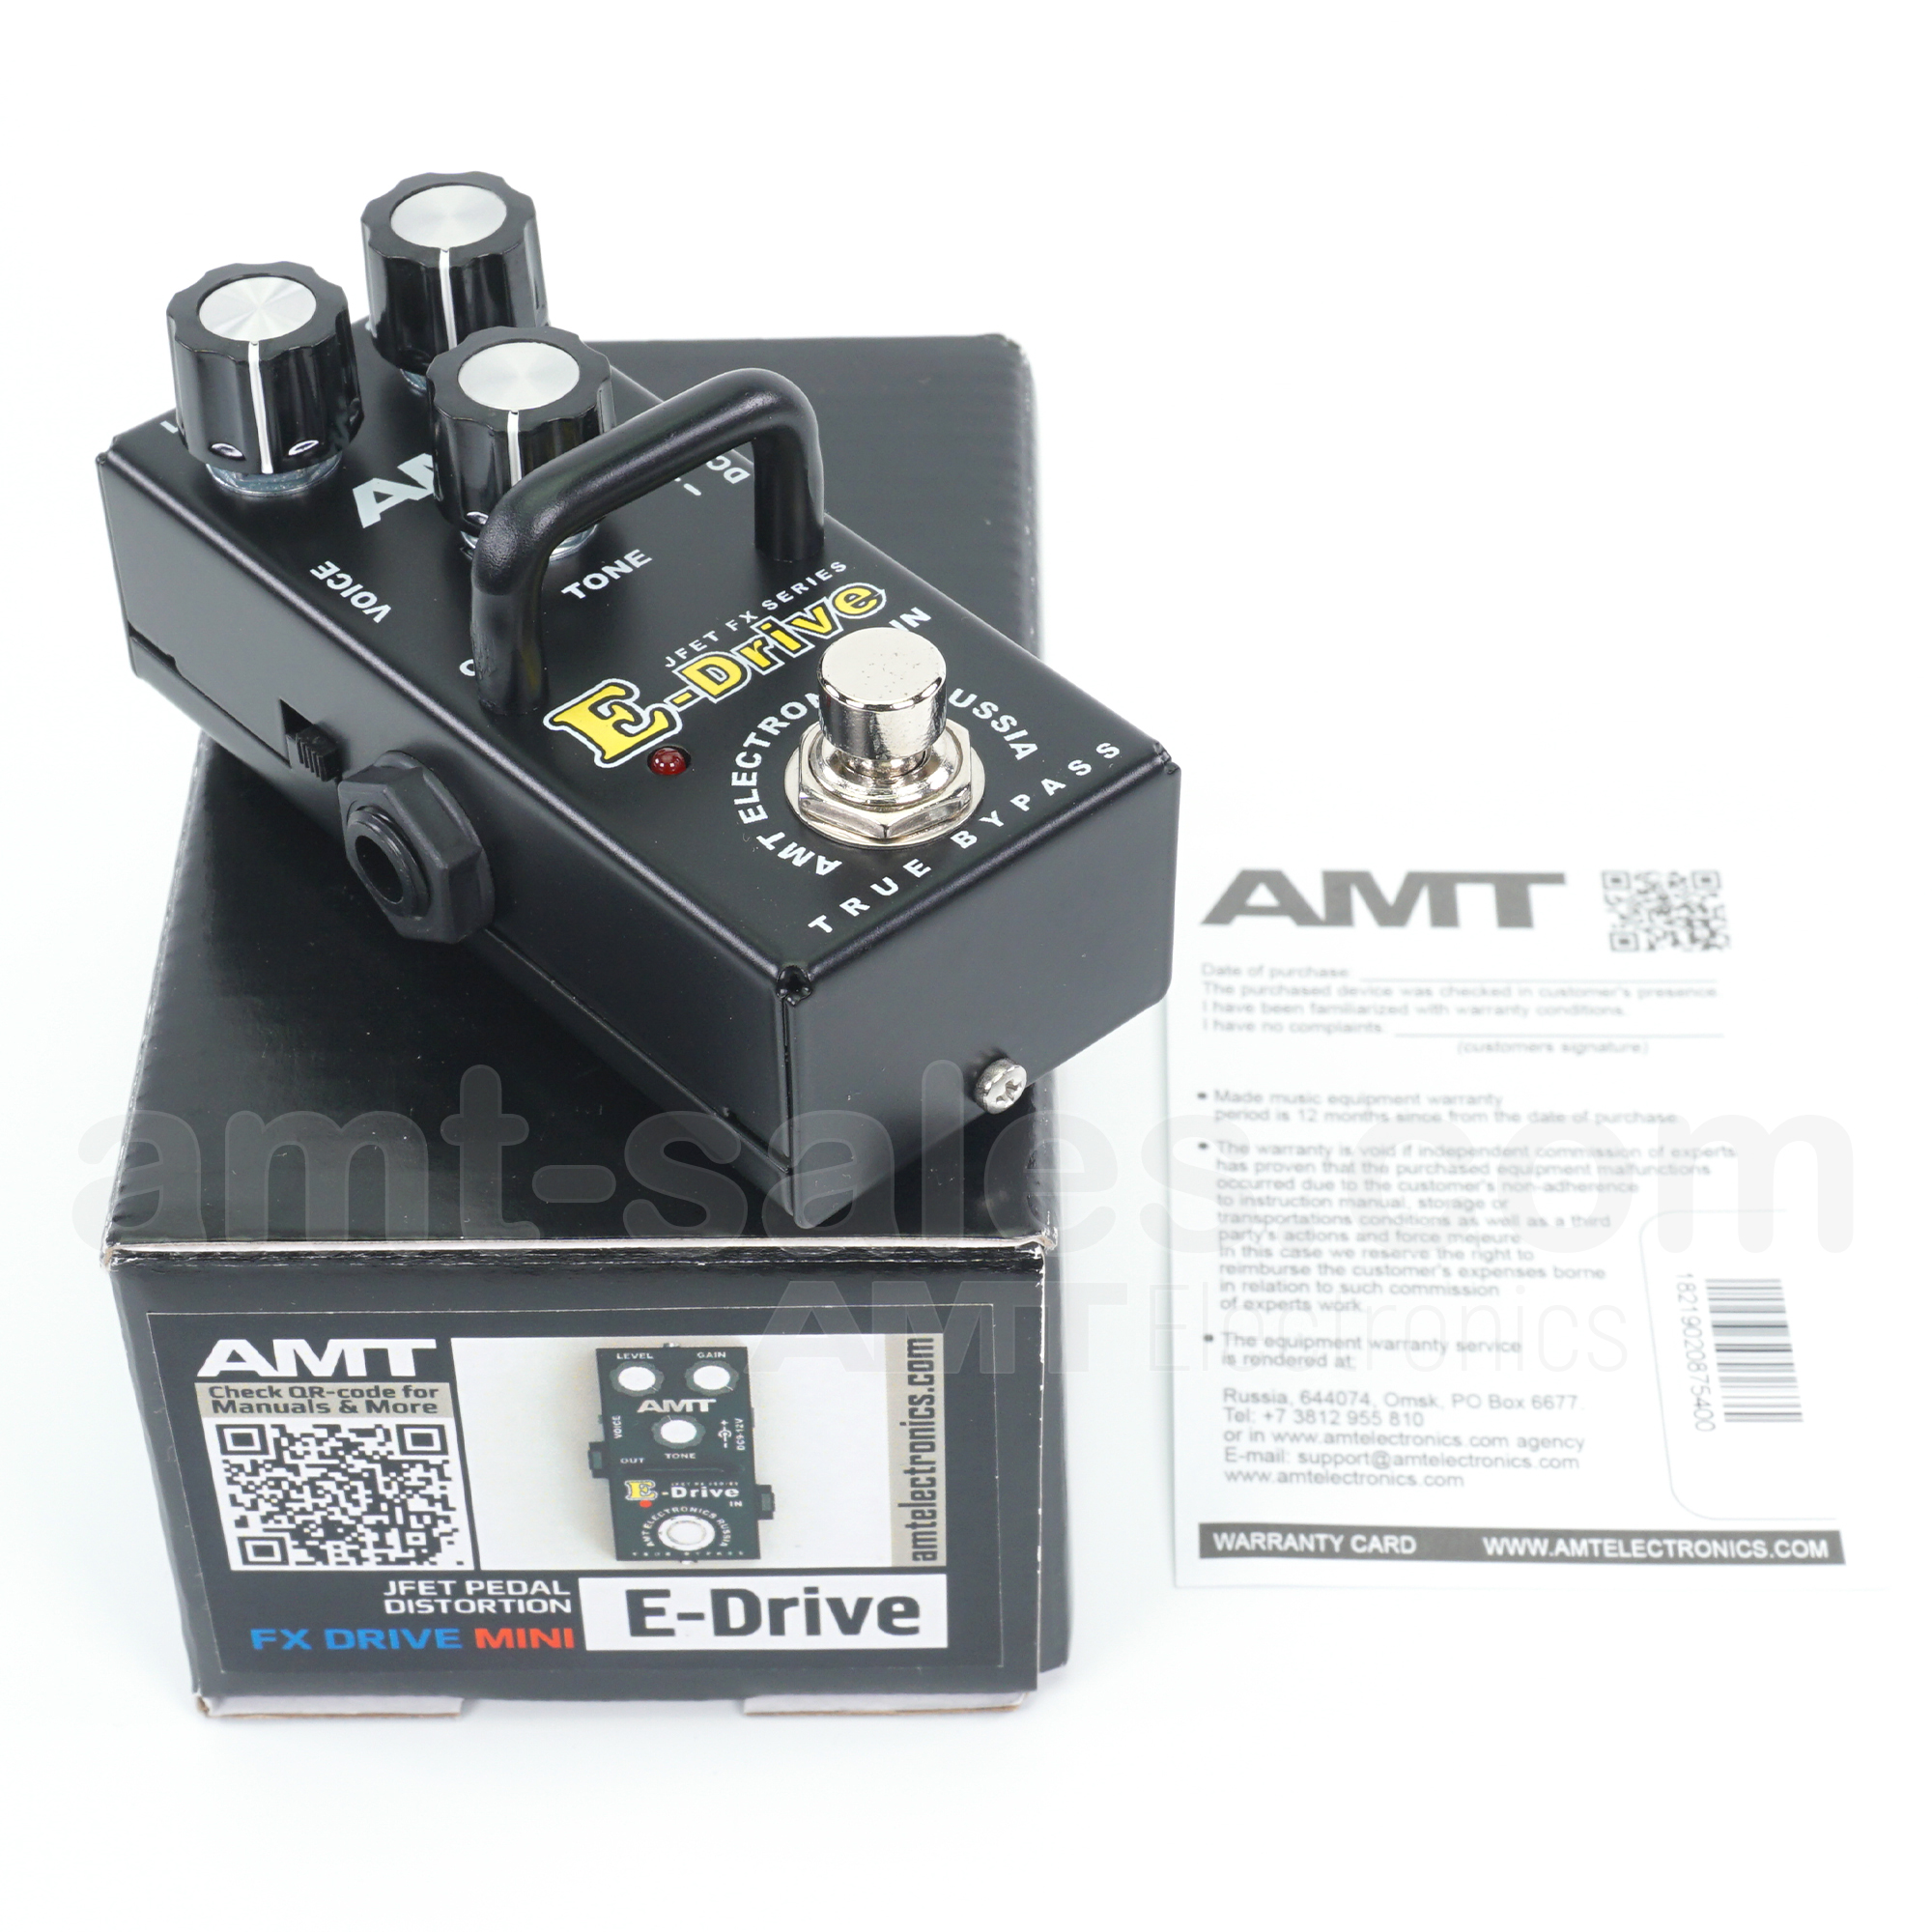 AMT E-Drive mini - JFET distortion pedal